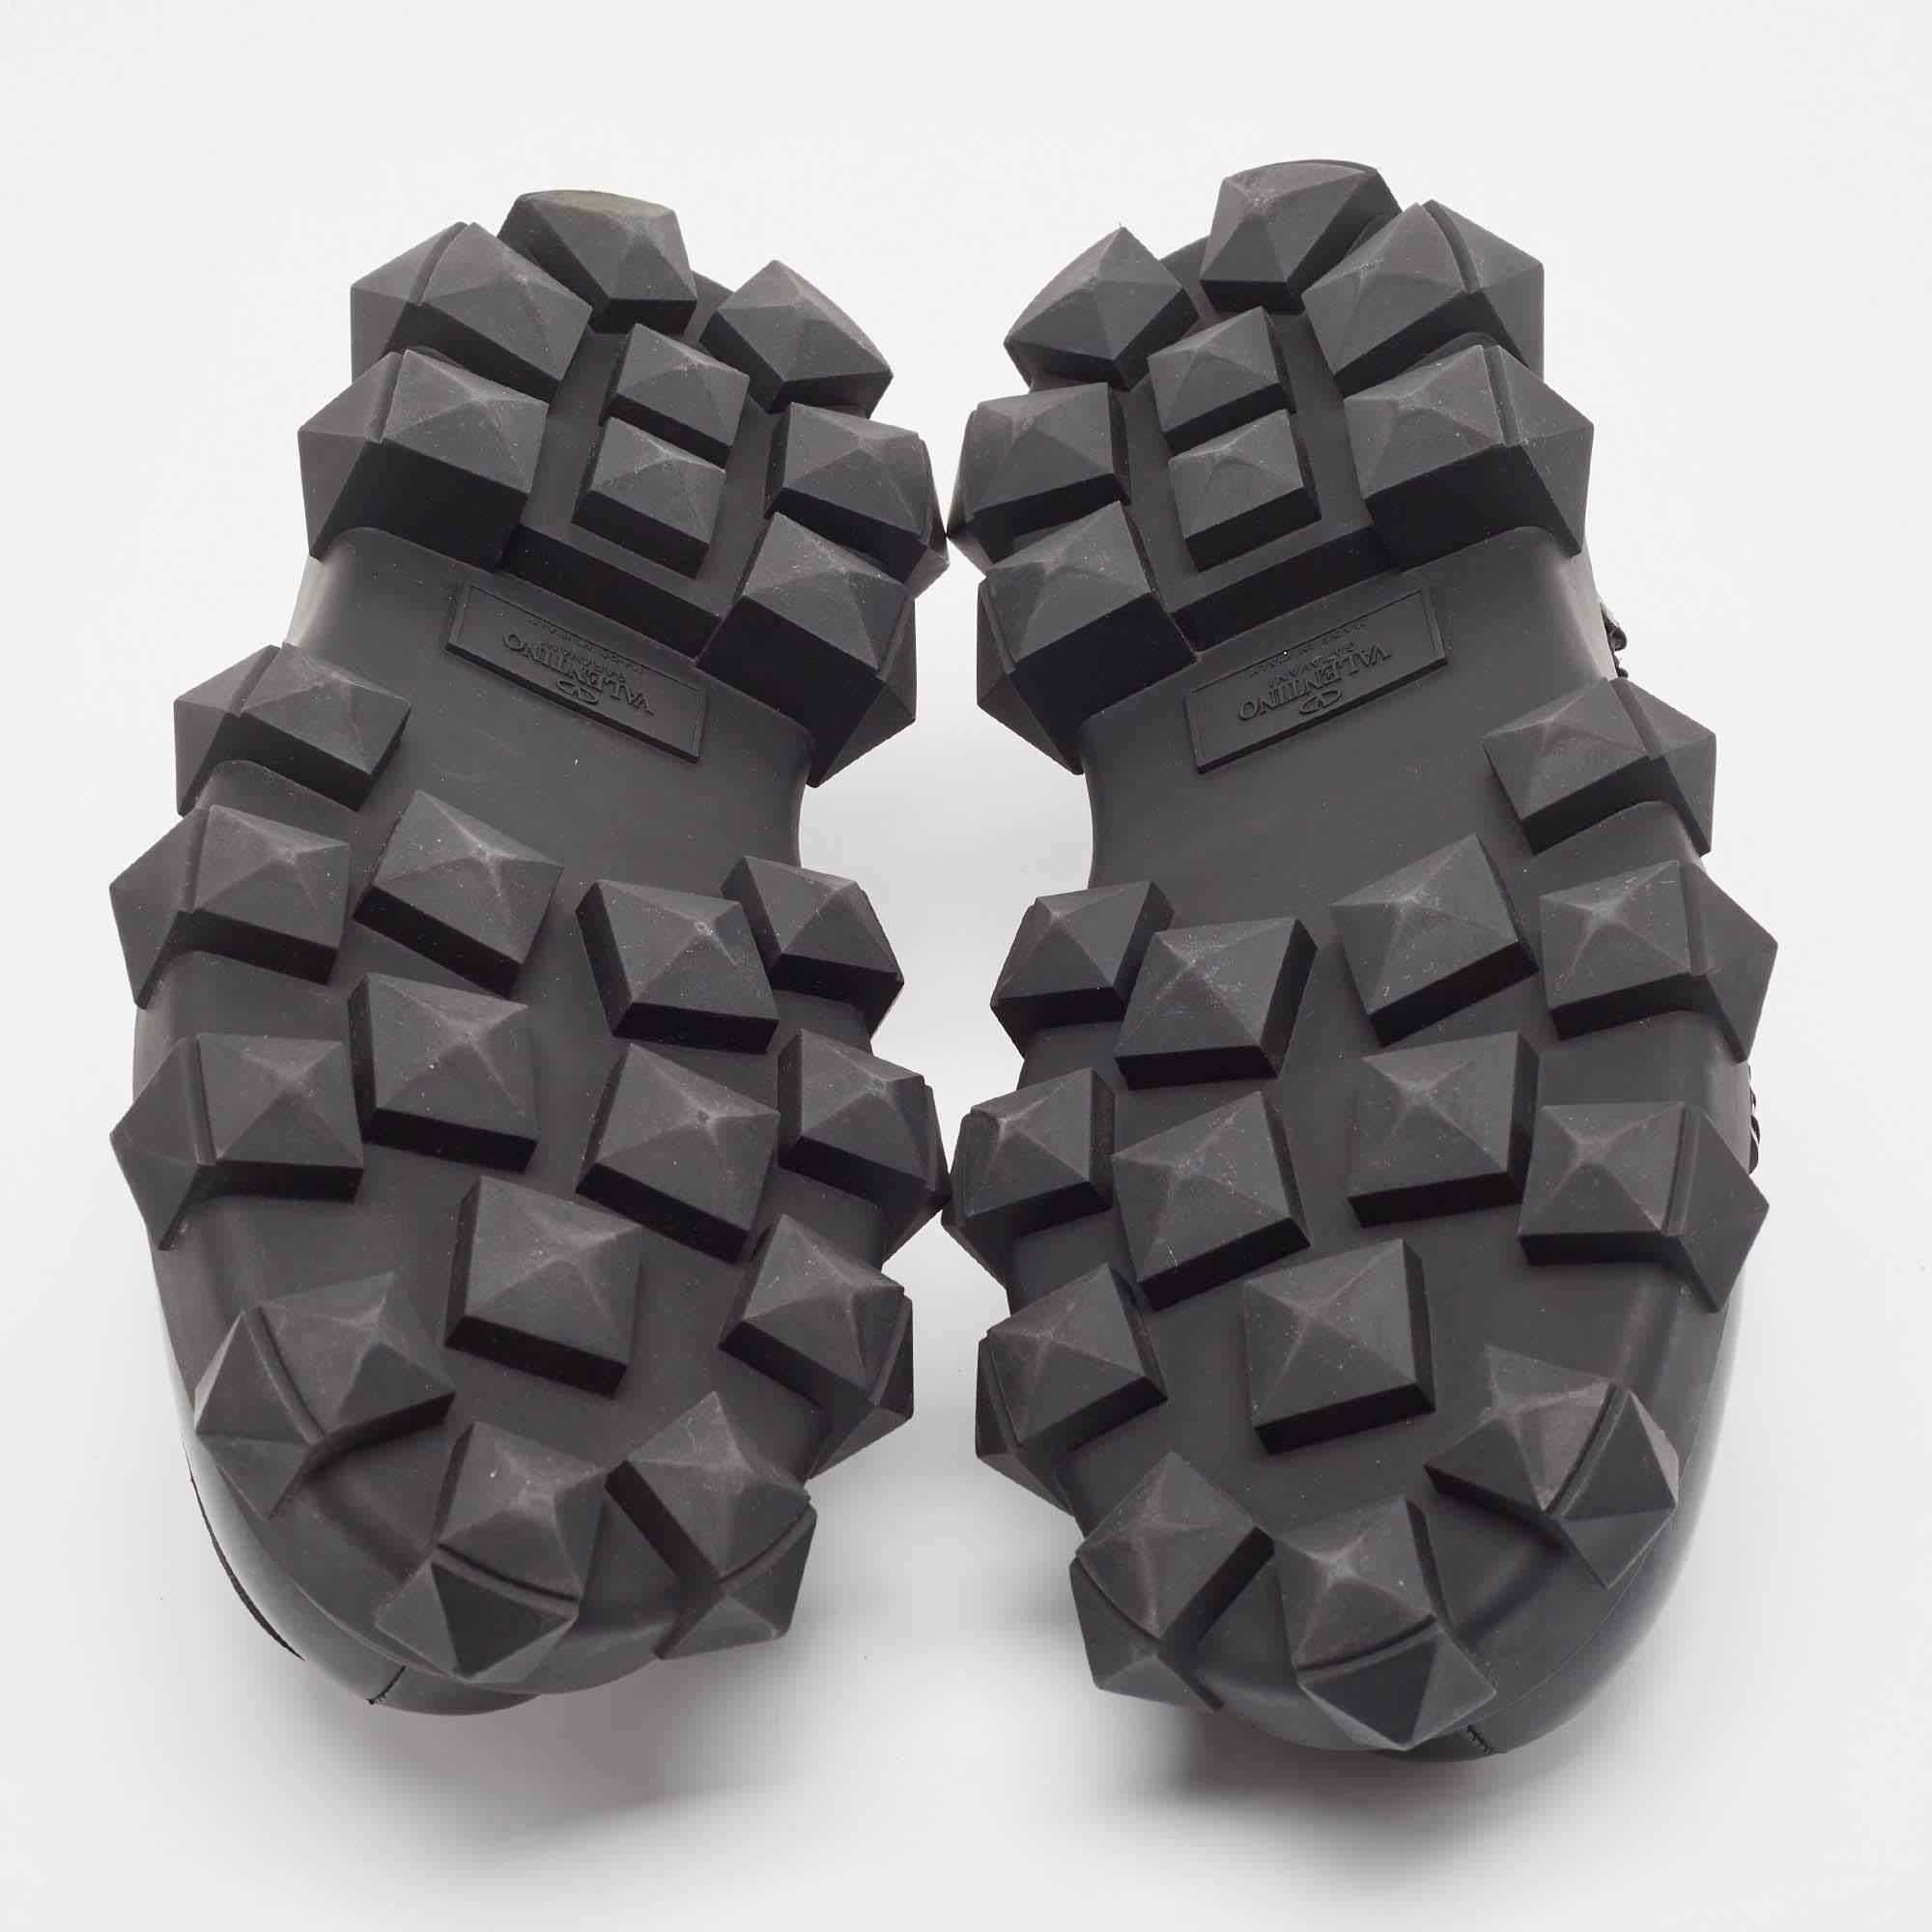 Men's Valentino Garavani Black Leather Trackstud Loafers Size 43